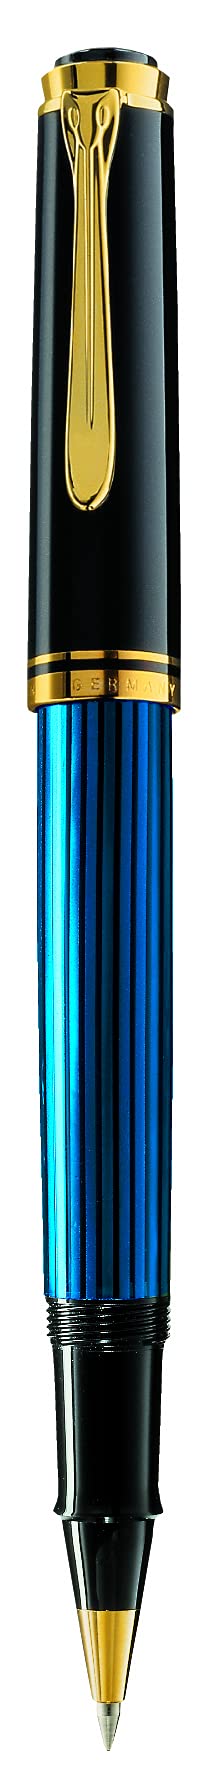 Pelikan Souverän R400 Rollerball Pen, Black/Blue, 1 Each (997502)